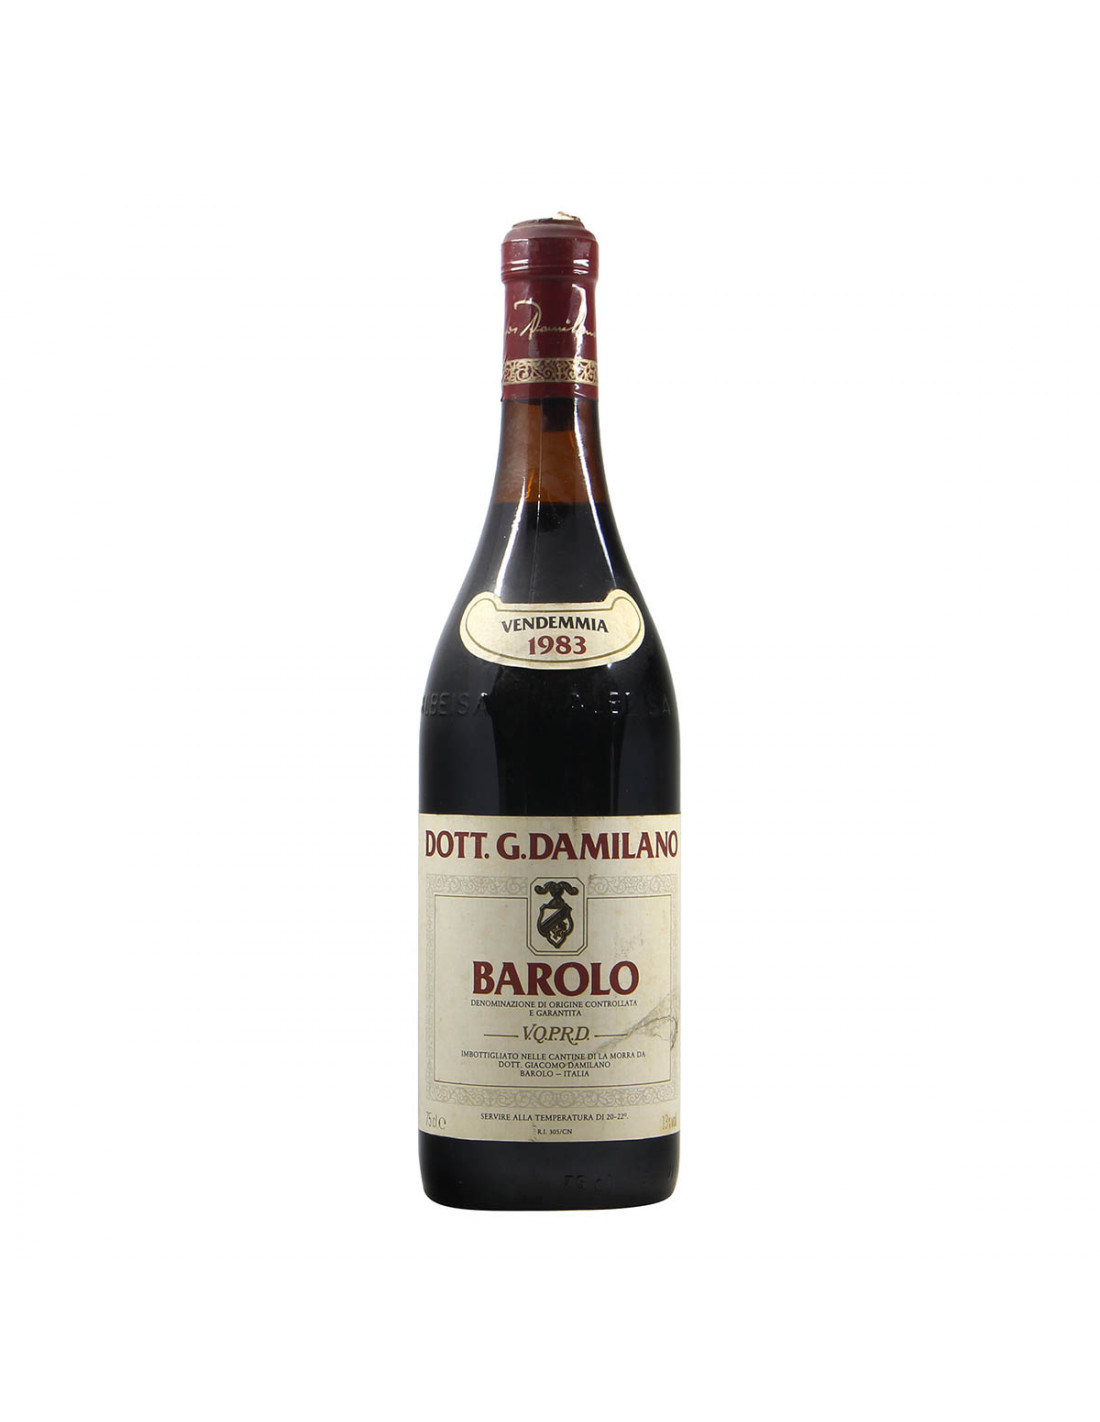 Damilano Barolo 1983 Grandi Bottiglie